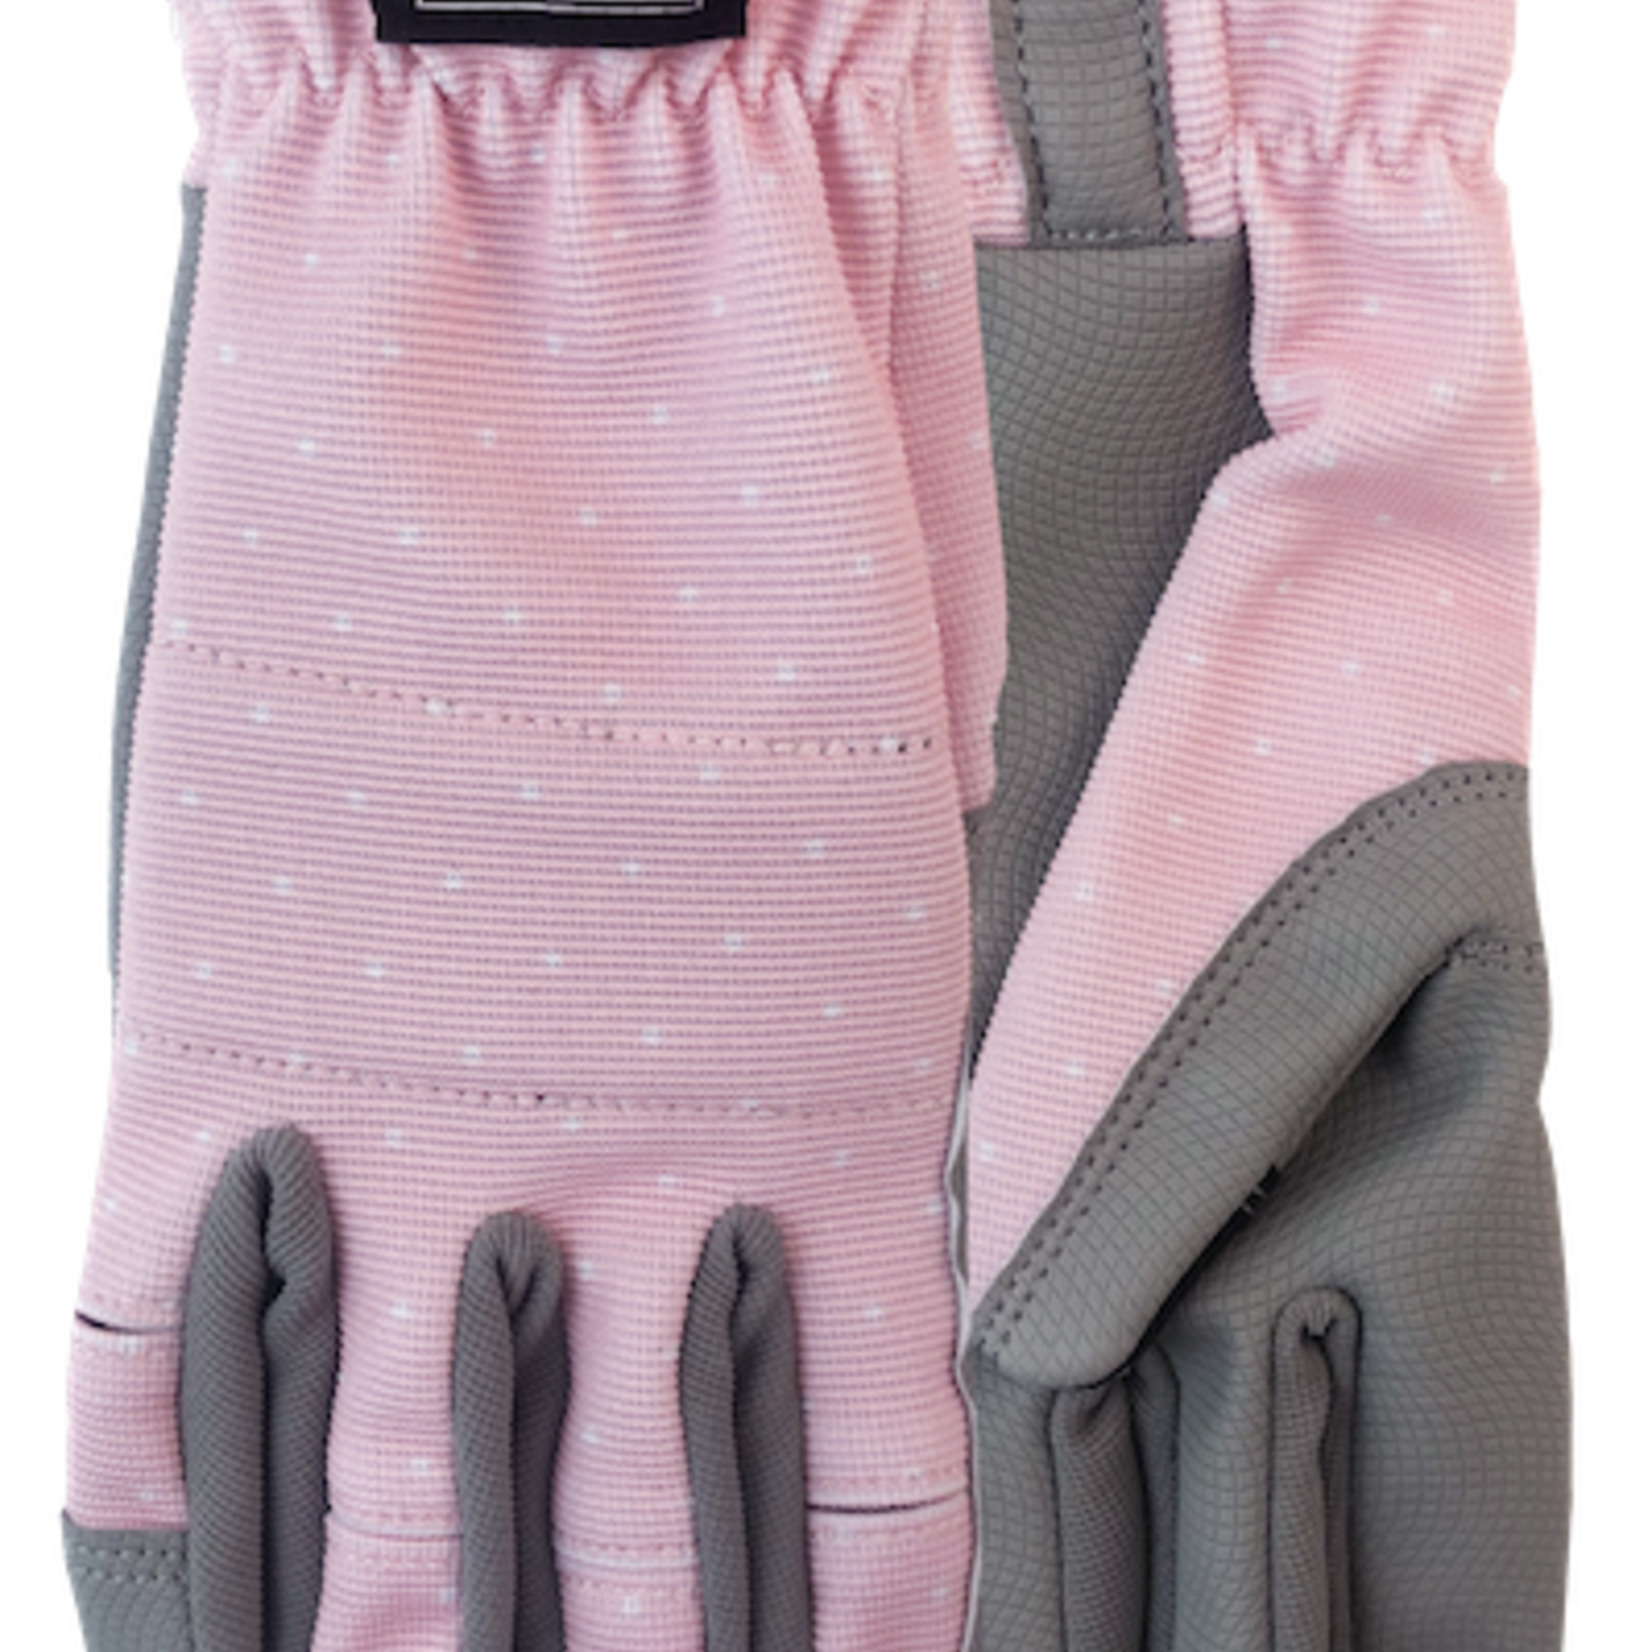 Uptown Girl Glove-Large